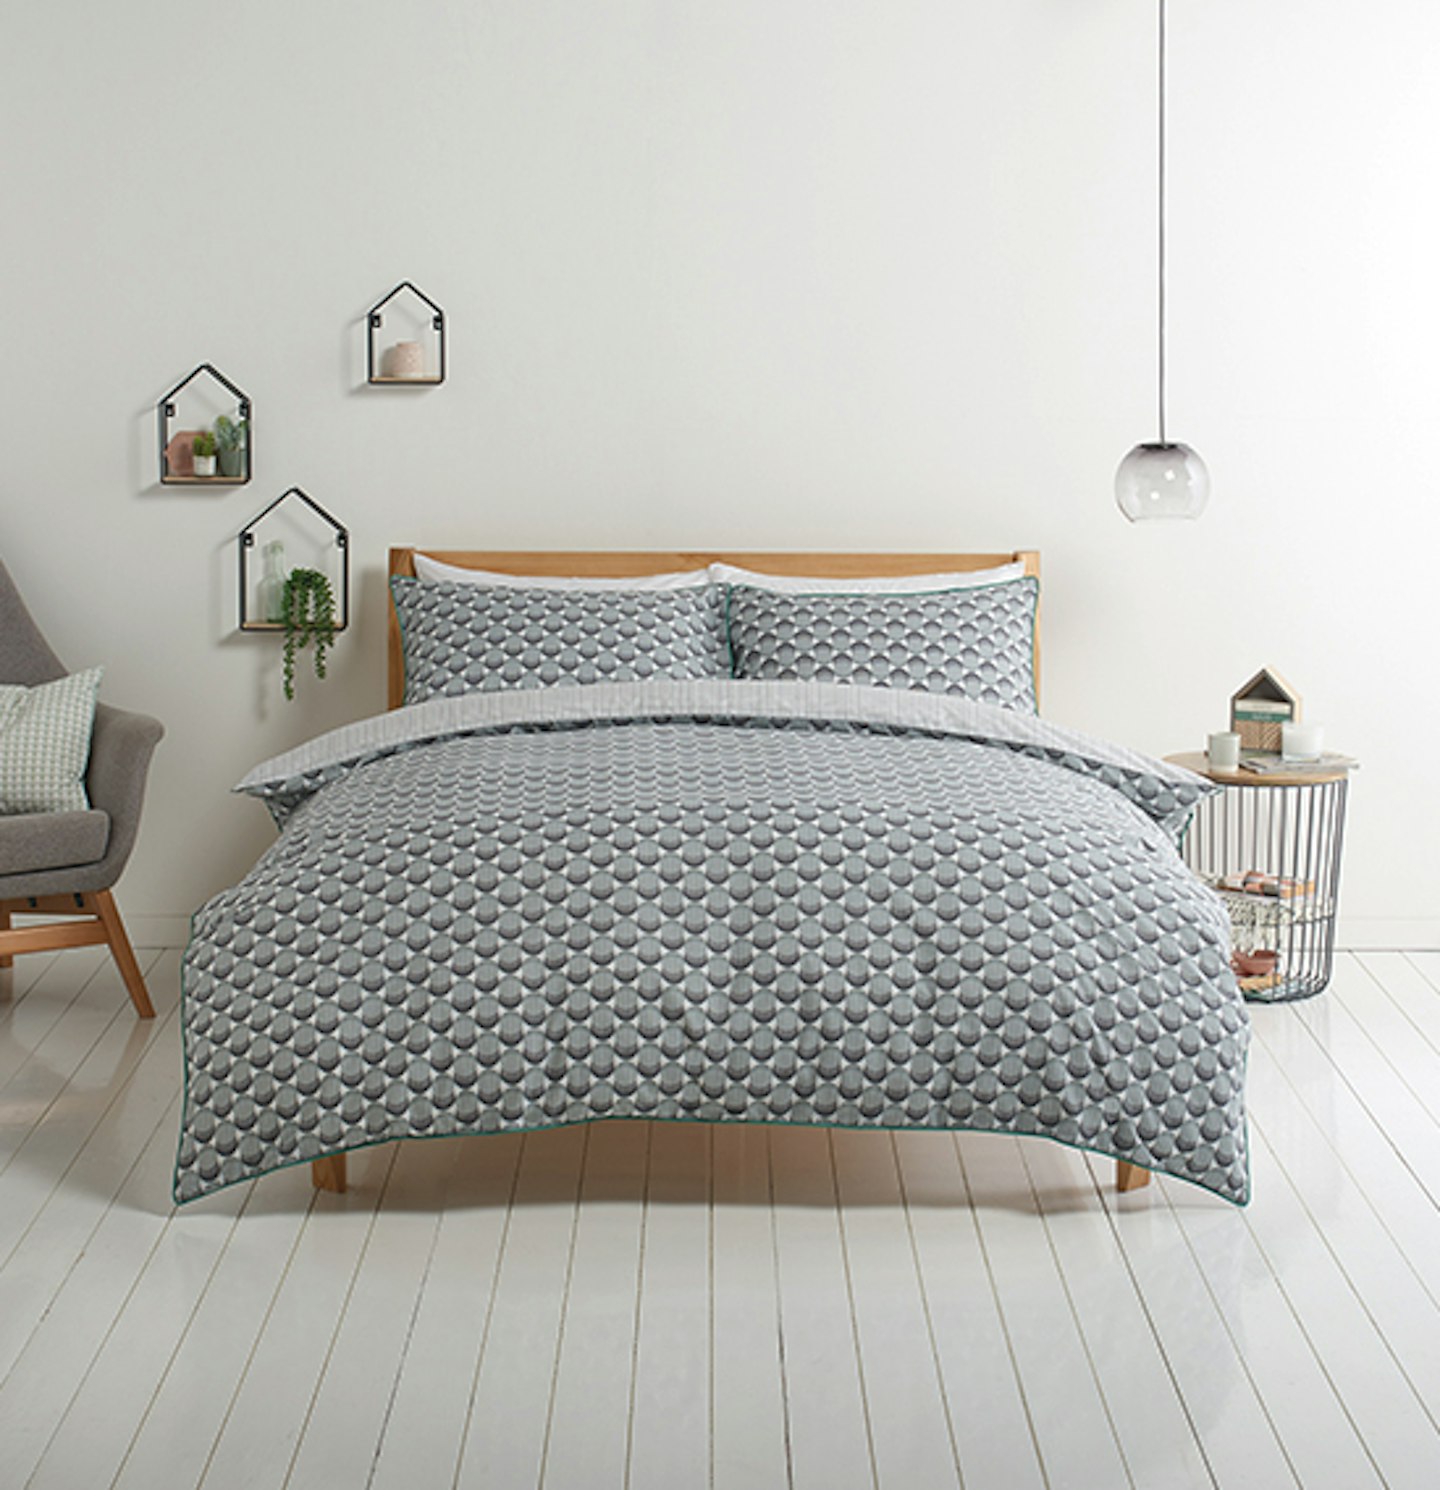 Sainsbury's Home Monochrome Circles Printed Bed Linen, Single, 18